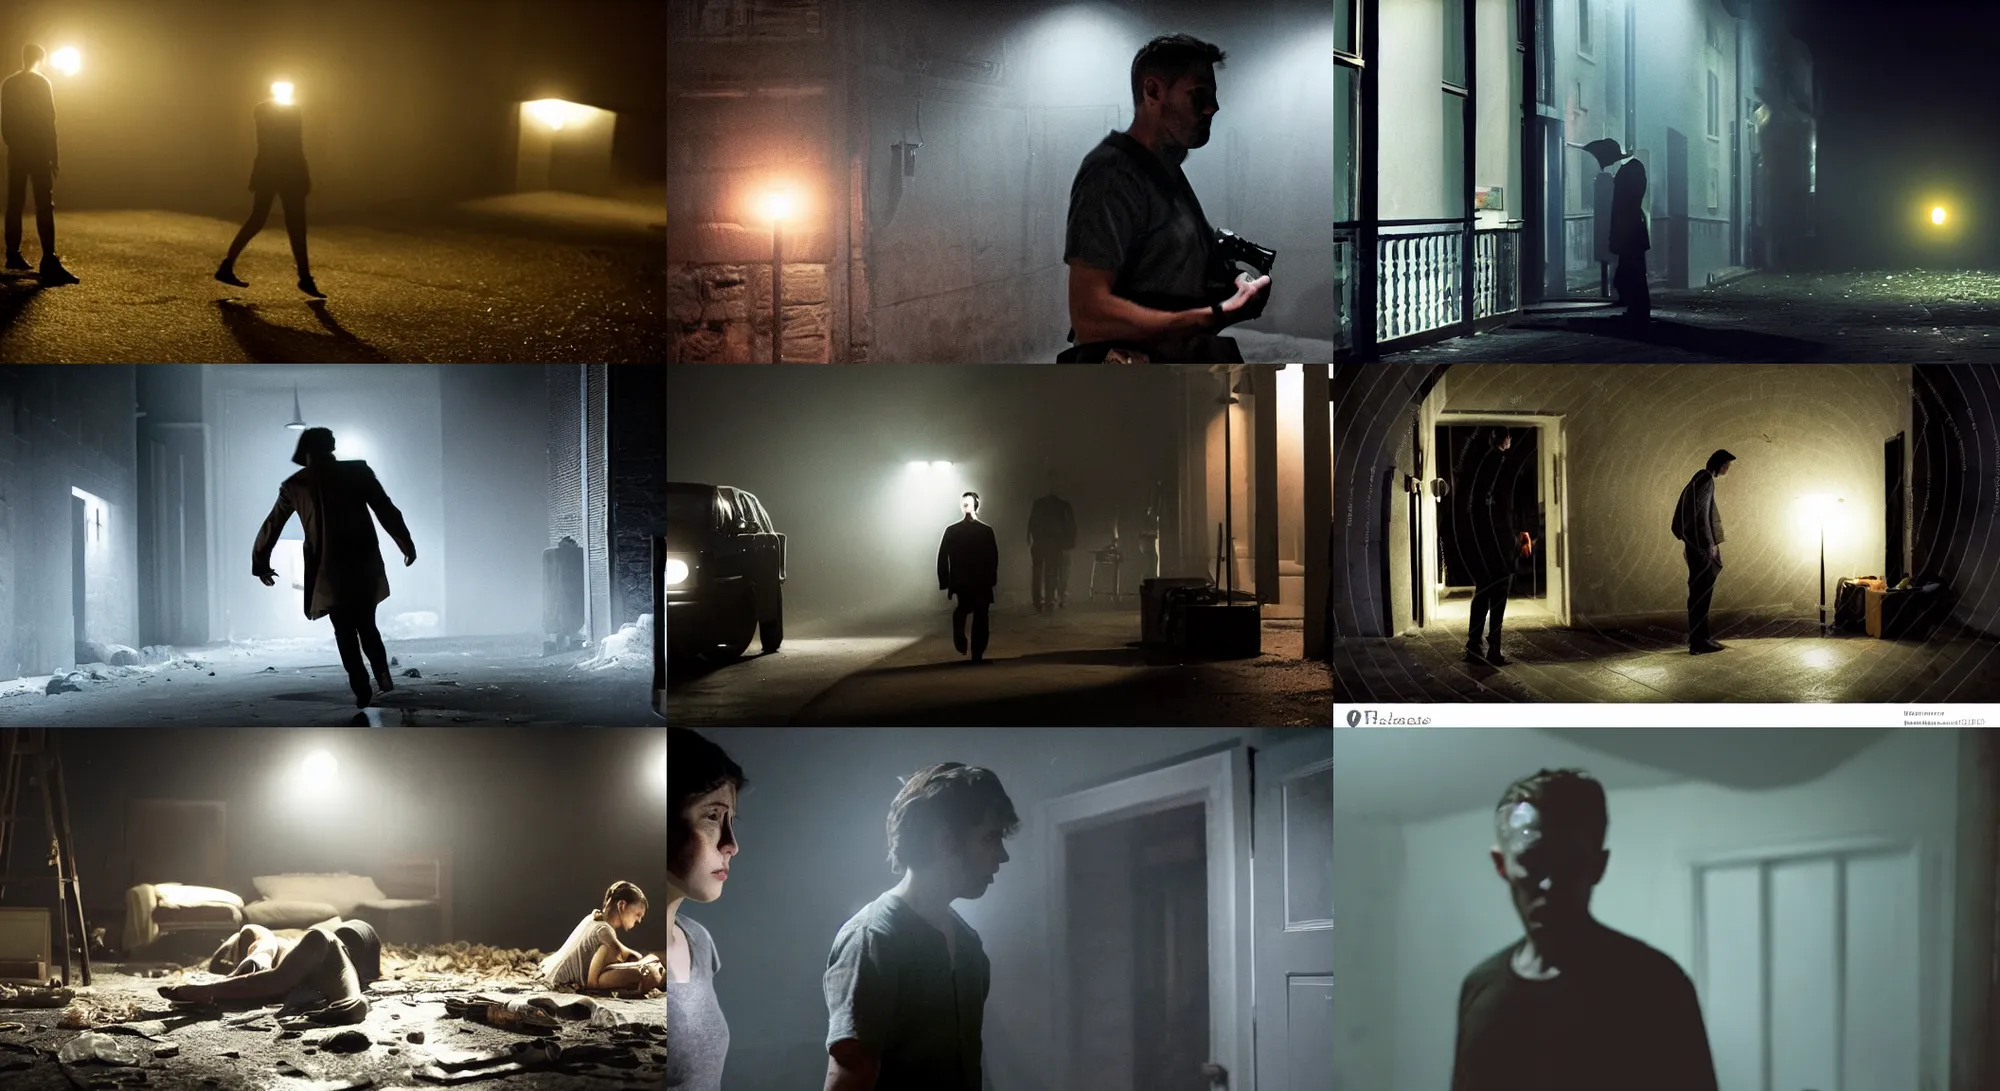 Prompt: movie still inquiry drama thriller dark scene cinematic lighting, photorealistic, hyperrealistic low light french movie